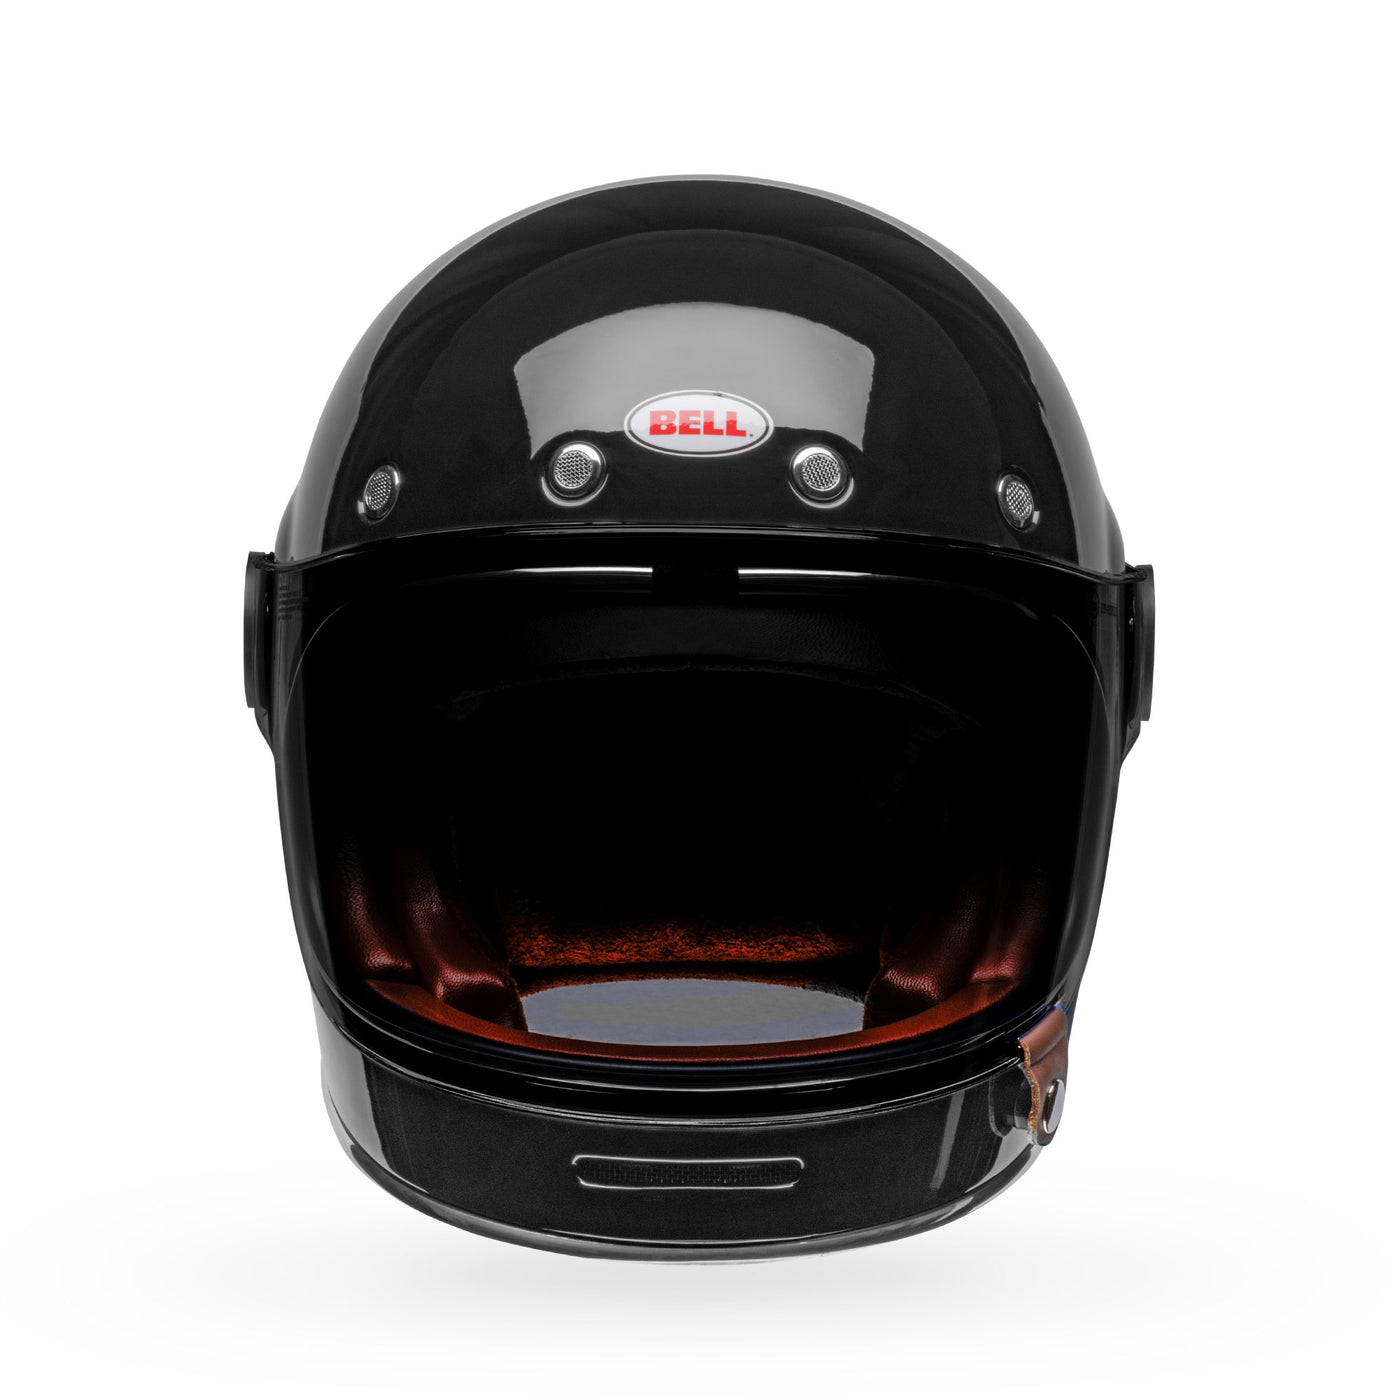 bell bullitt culture classic motorcycle helmet gloss black front